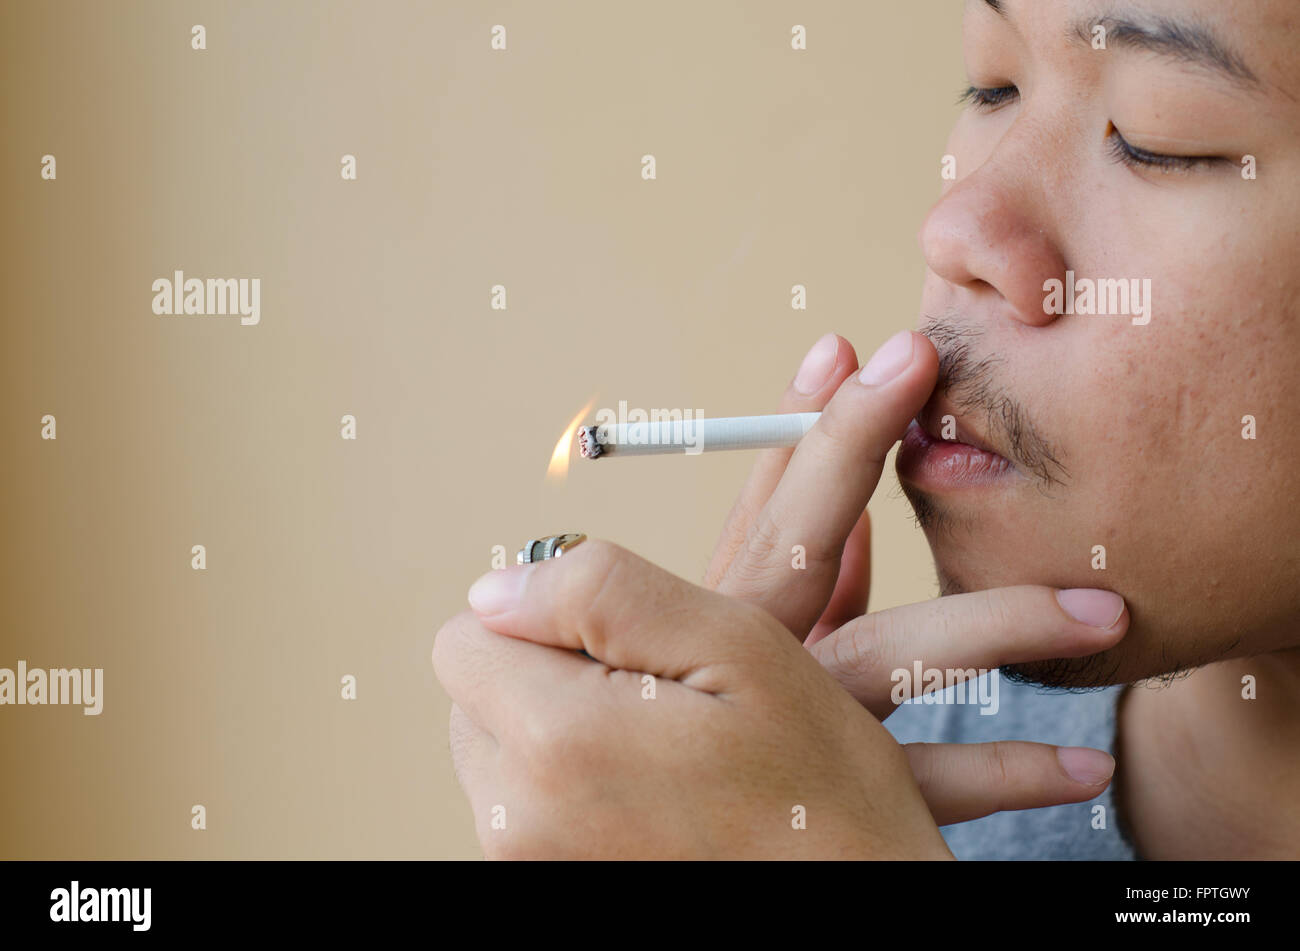 Asian young man smoking cigarette Stock Photo